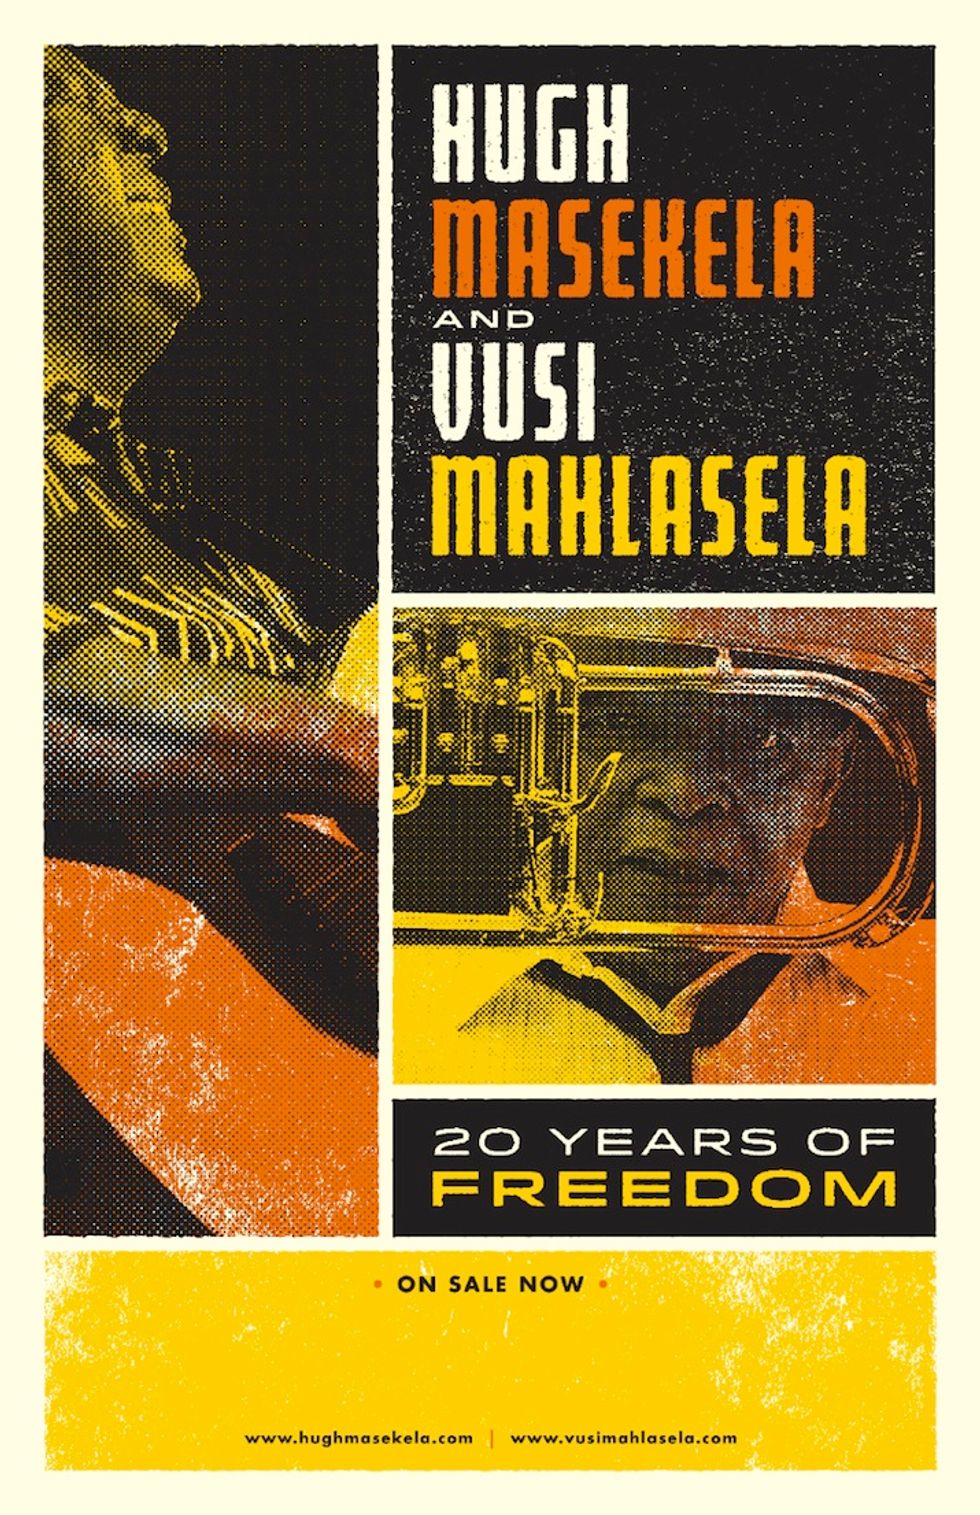 Hugh Masekela & Vusi Mahlasela's '20 Years Of Freedom' North American Tour